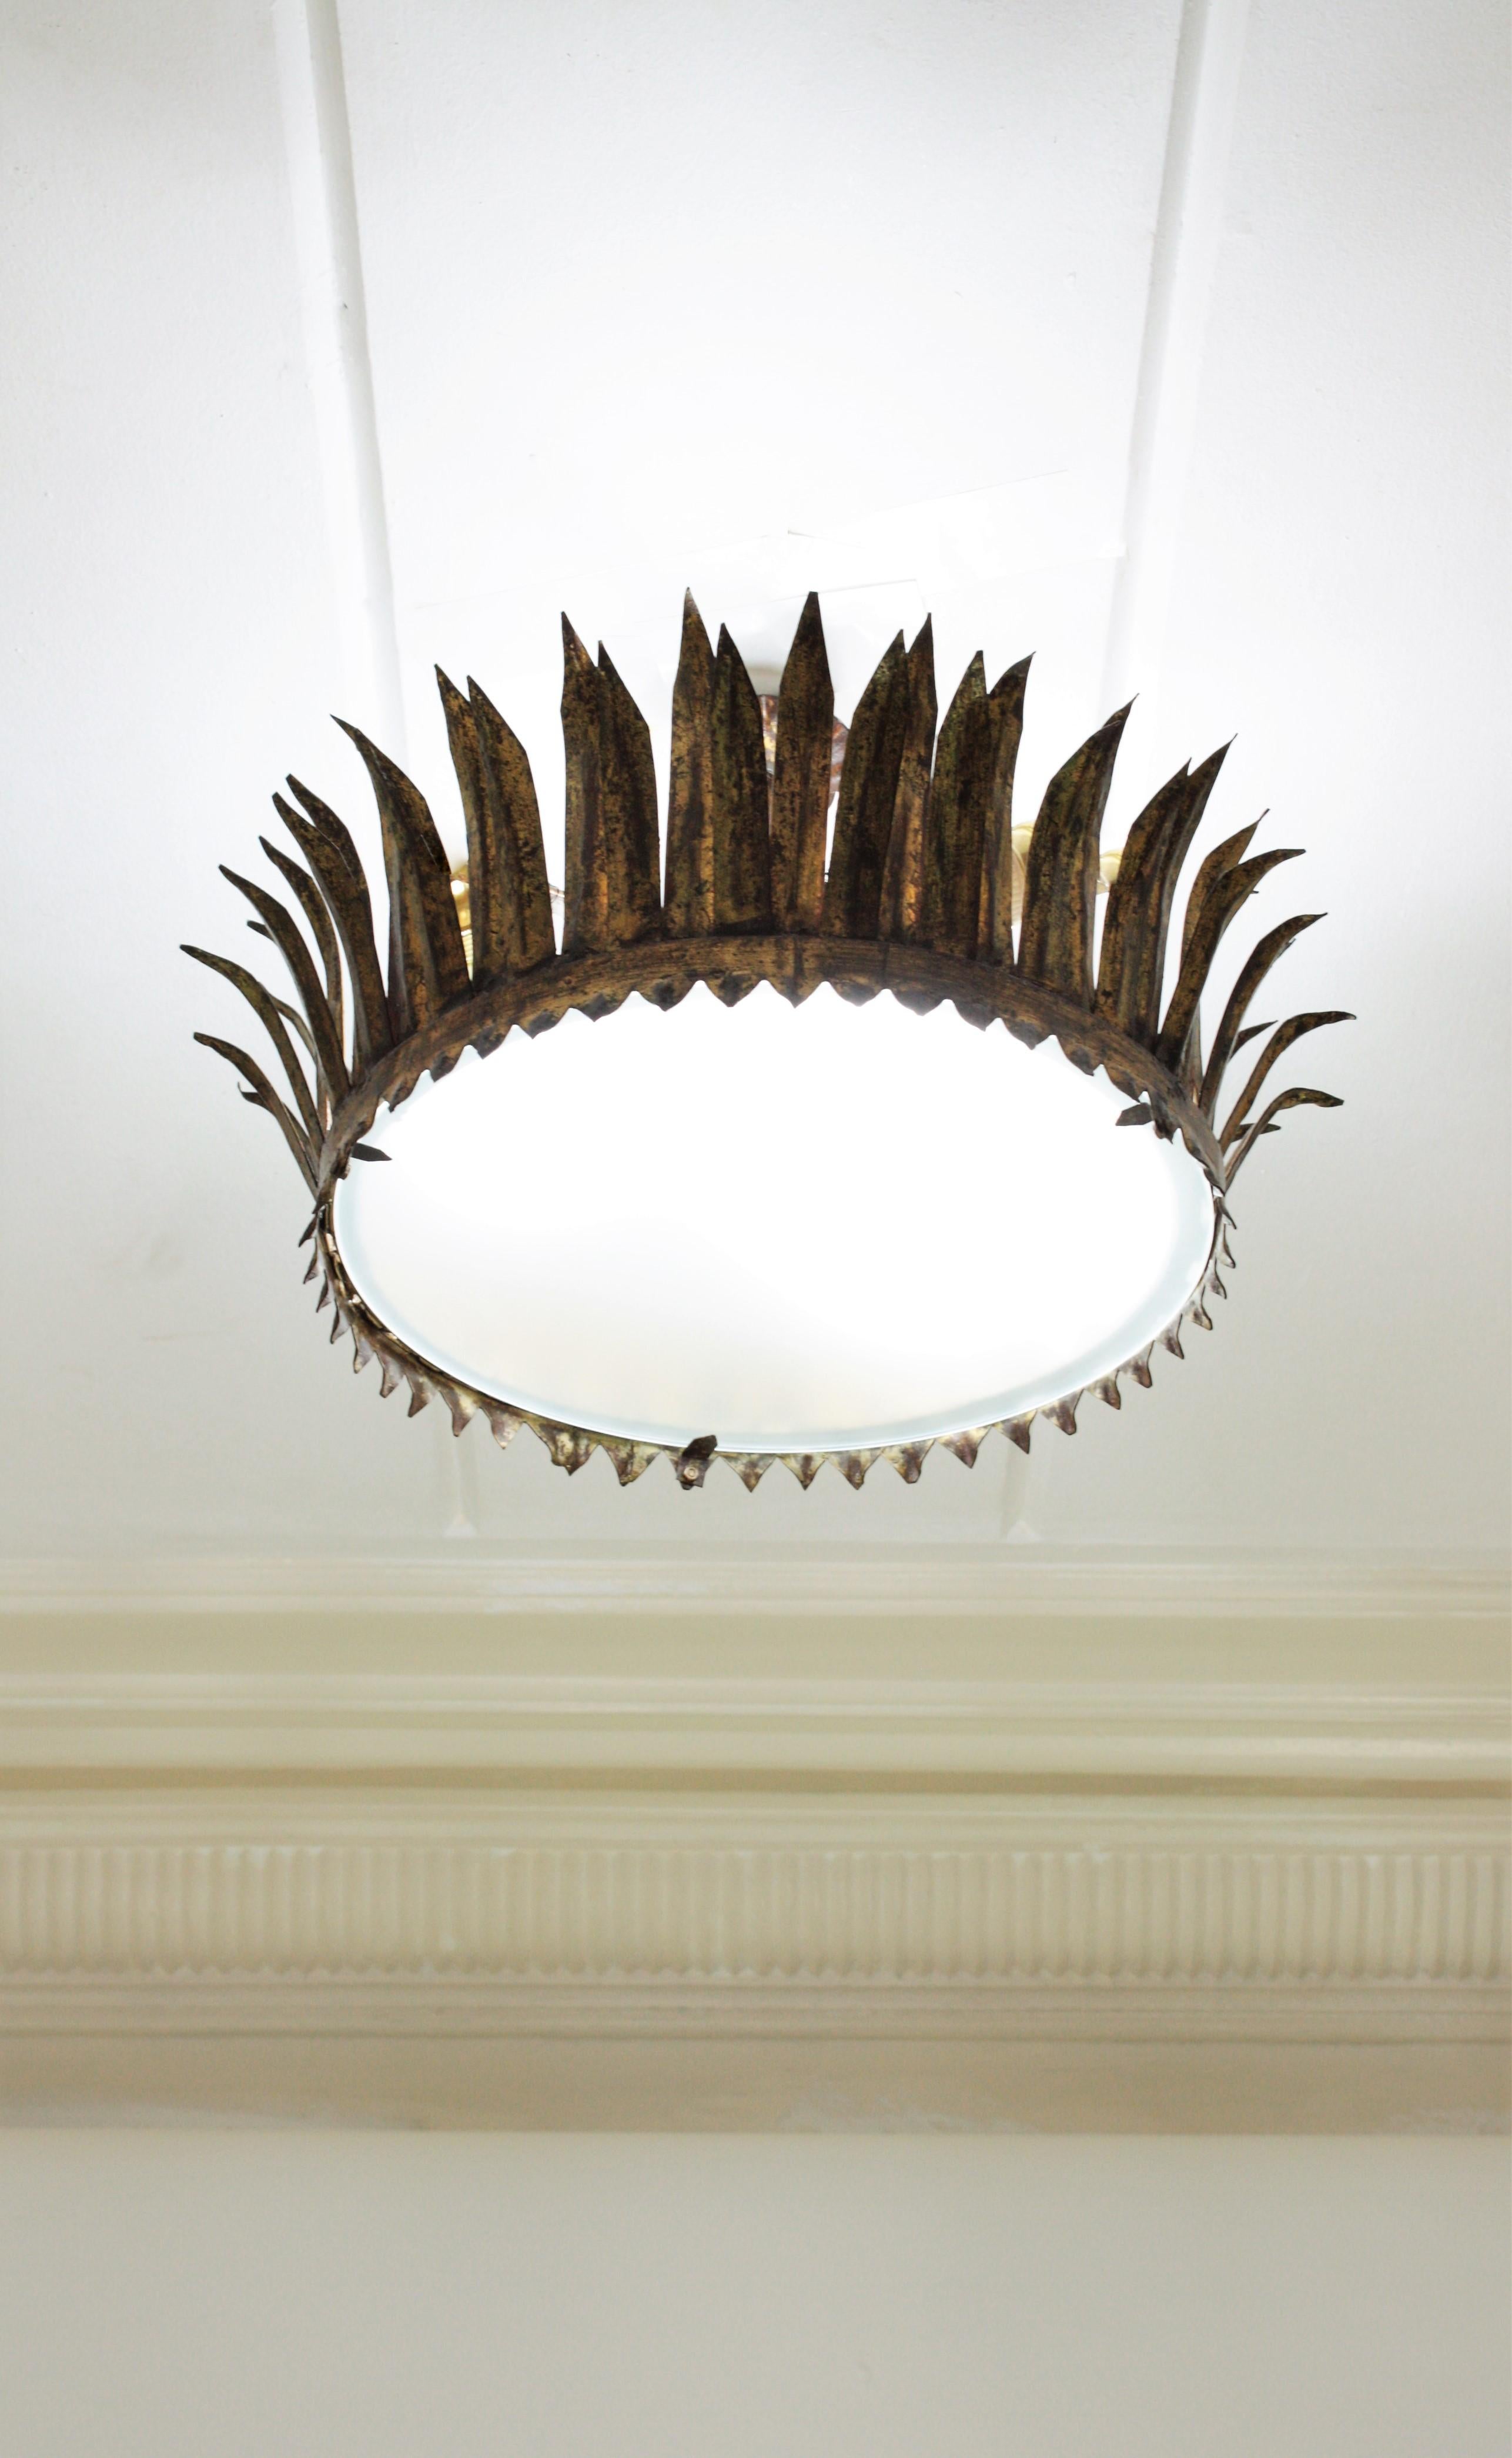 Neoclassical Revival French Gilt Metal Sunburst Crown Ceiling Light Fixture or Pendant